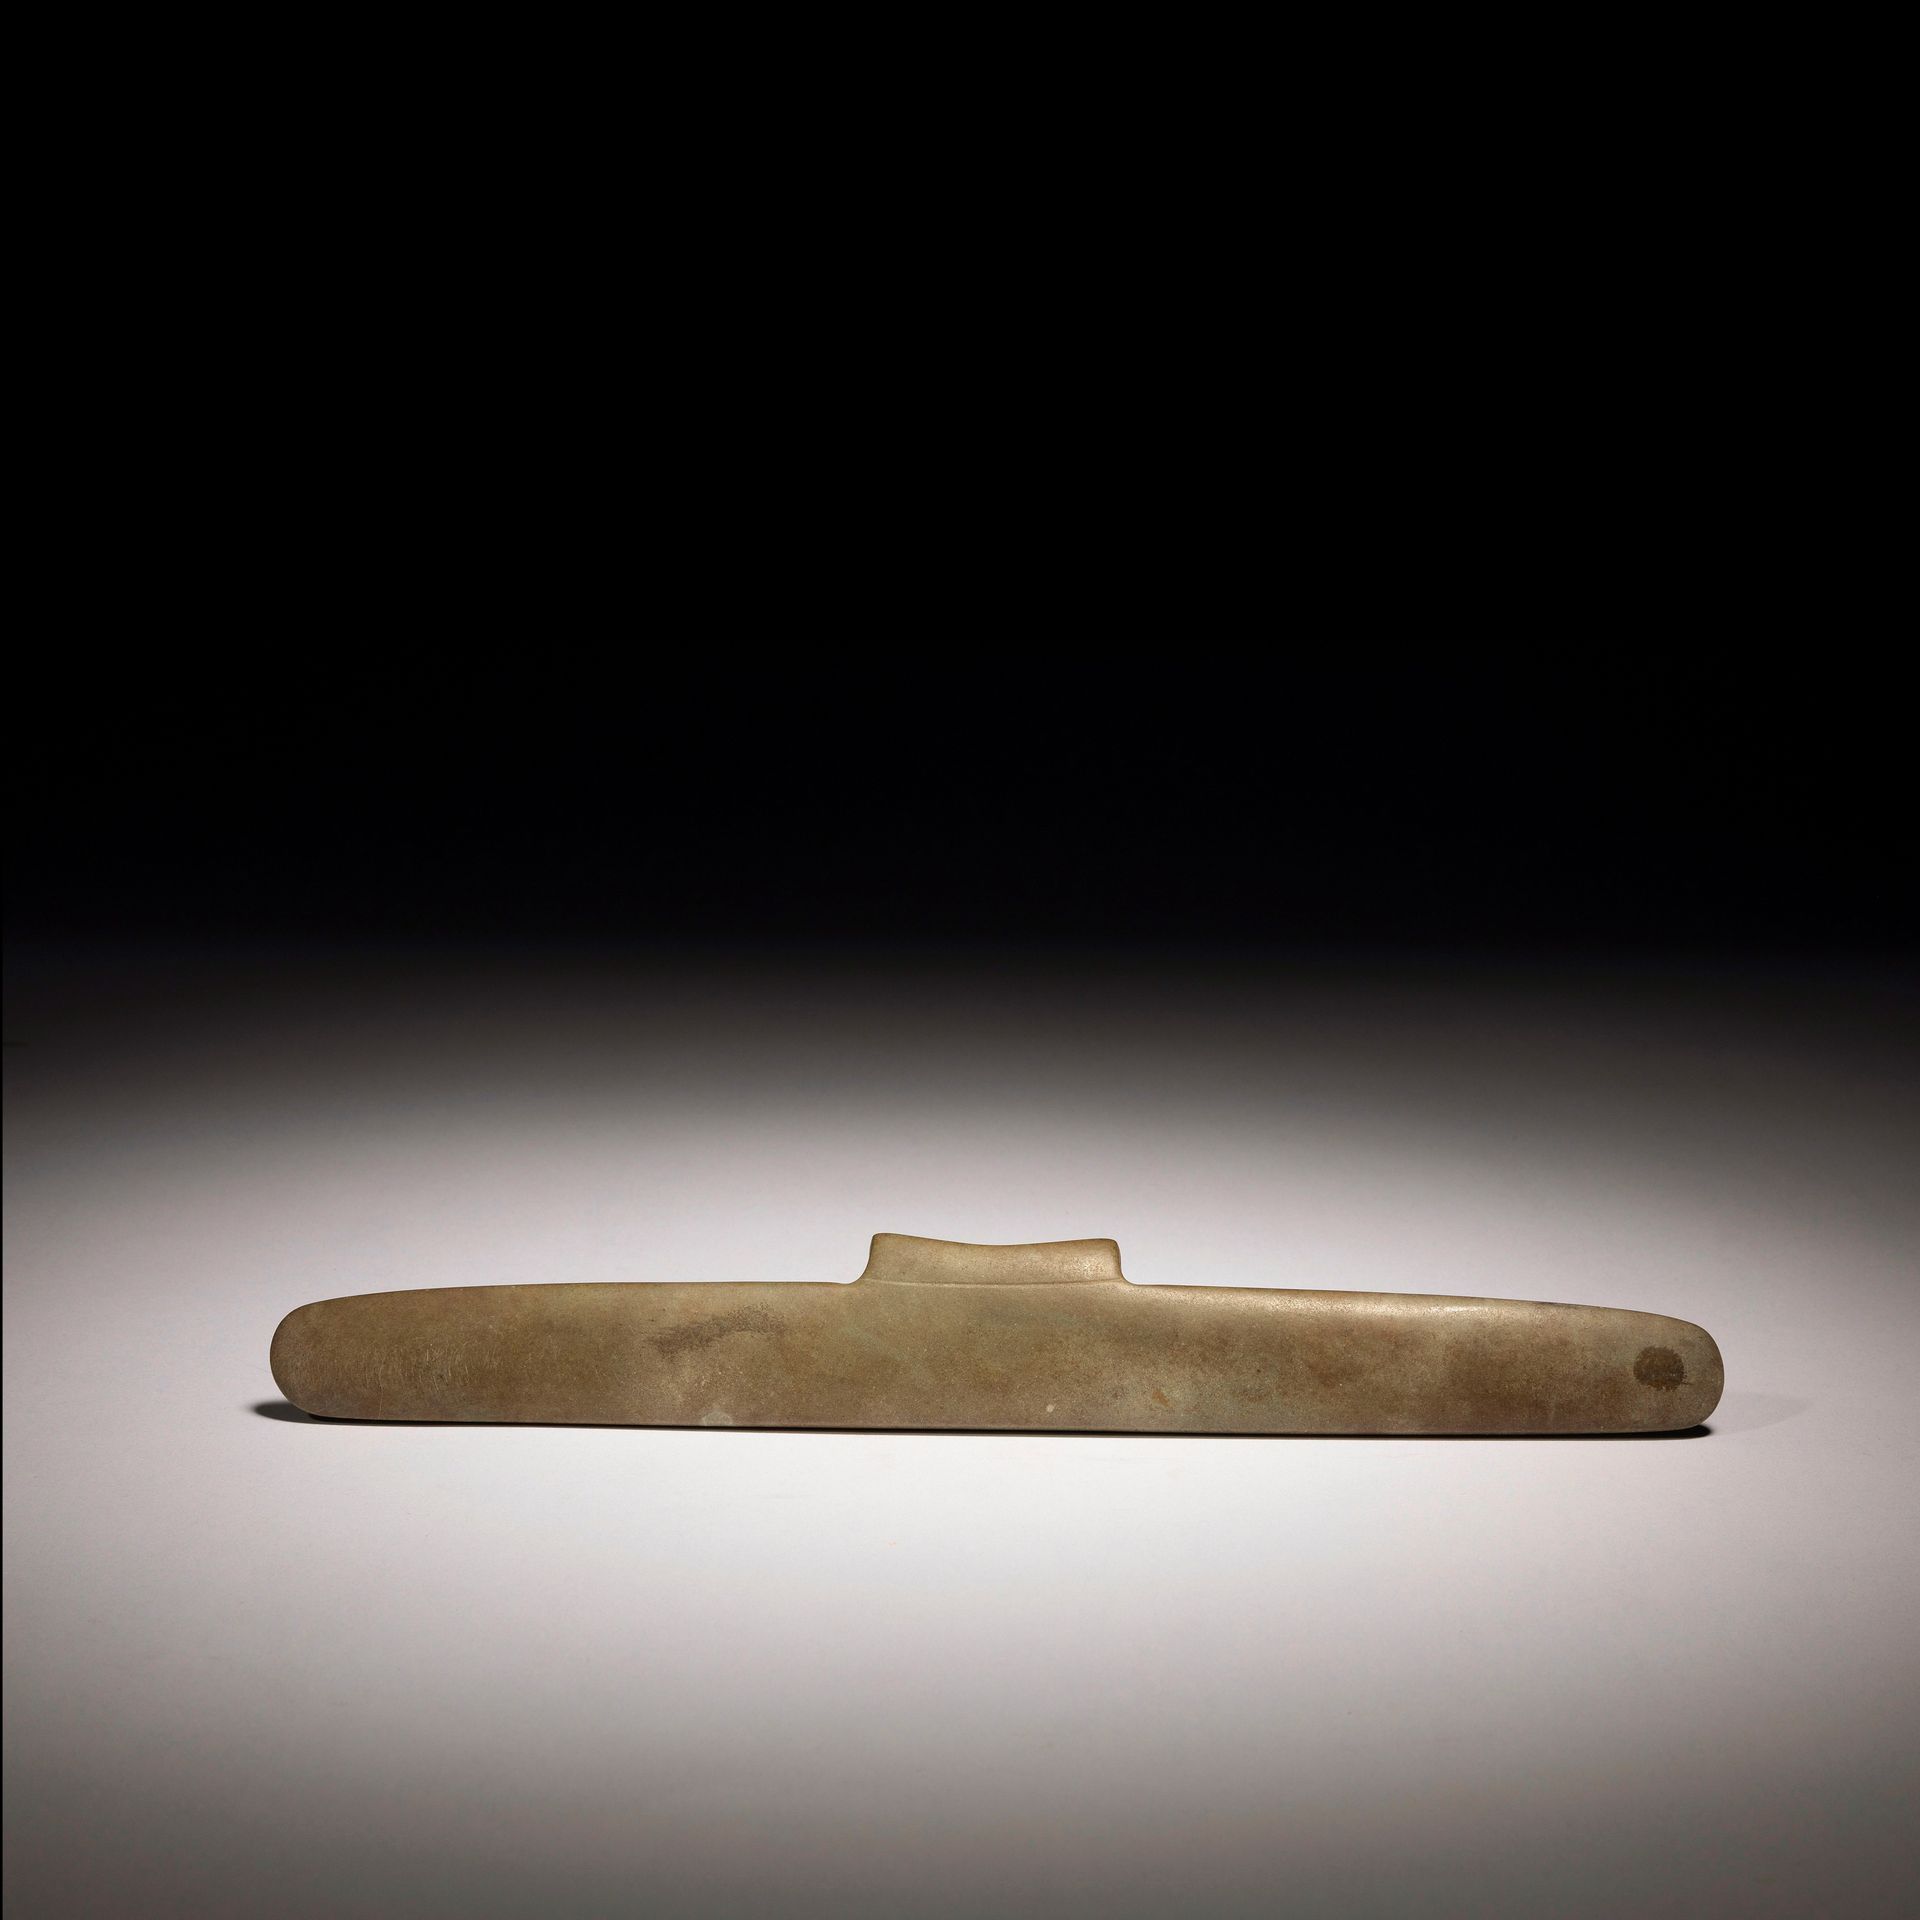 Null 一件古老而美丽的胸针吊坠，造型为翅膀，正面刻有图案。

泰罗纳文化，约公元1000年、

哥伦比亚

绿色的石头，有氧化铁的痕迹，美丽而古老的光泽。
&hellip;